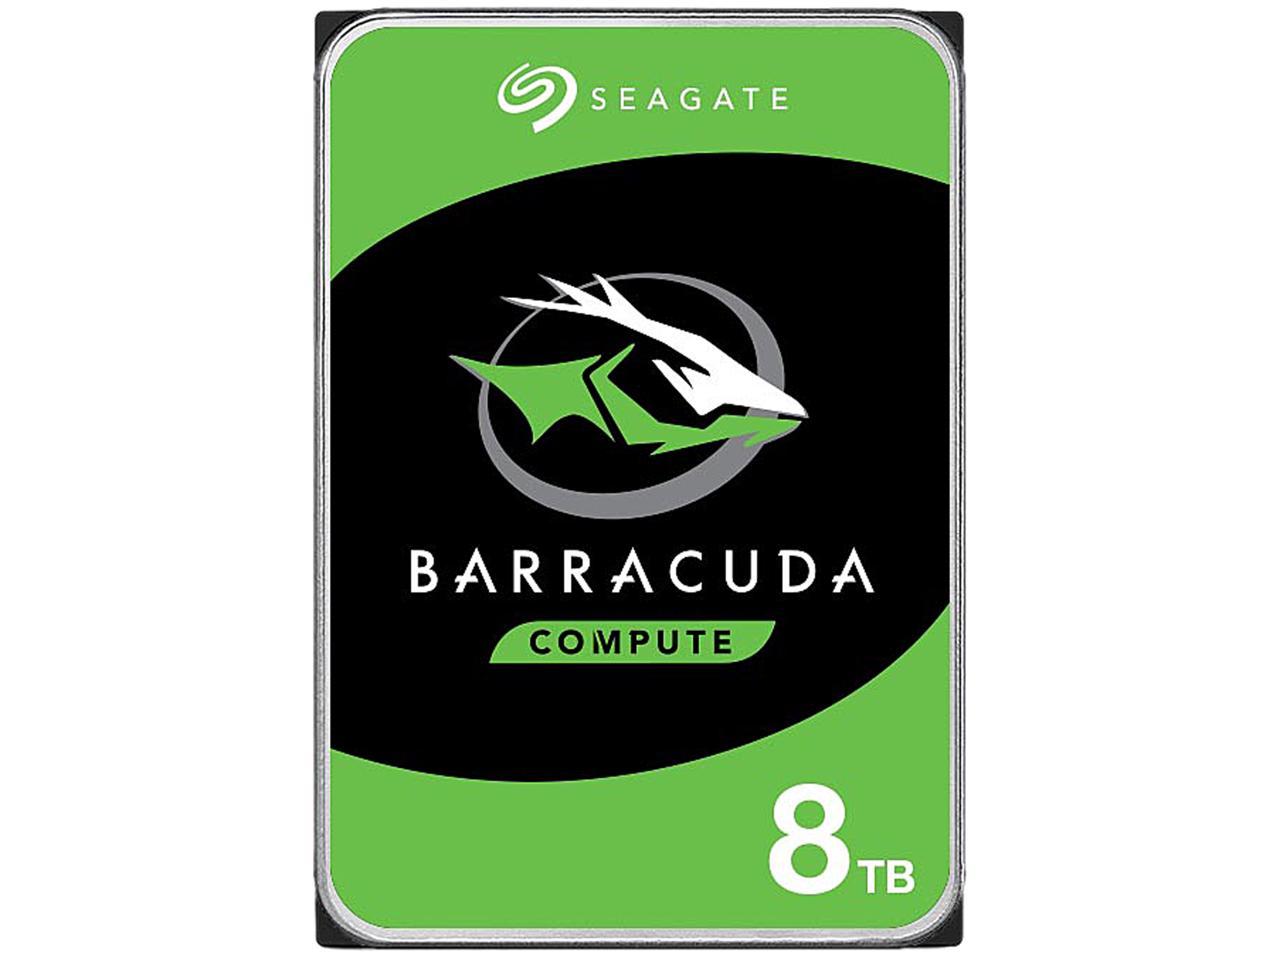 Seagate Barracuda St8000Dm004 8Tb 5400 Rpm 256Mb Cache Sata 6.0Gb/S 3.5" Internal Hard Drive Bare Drive